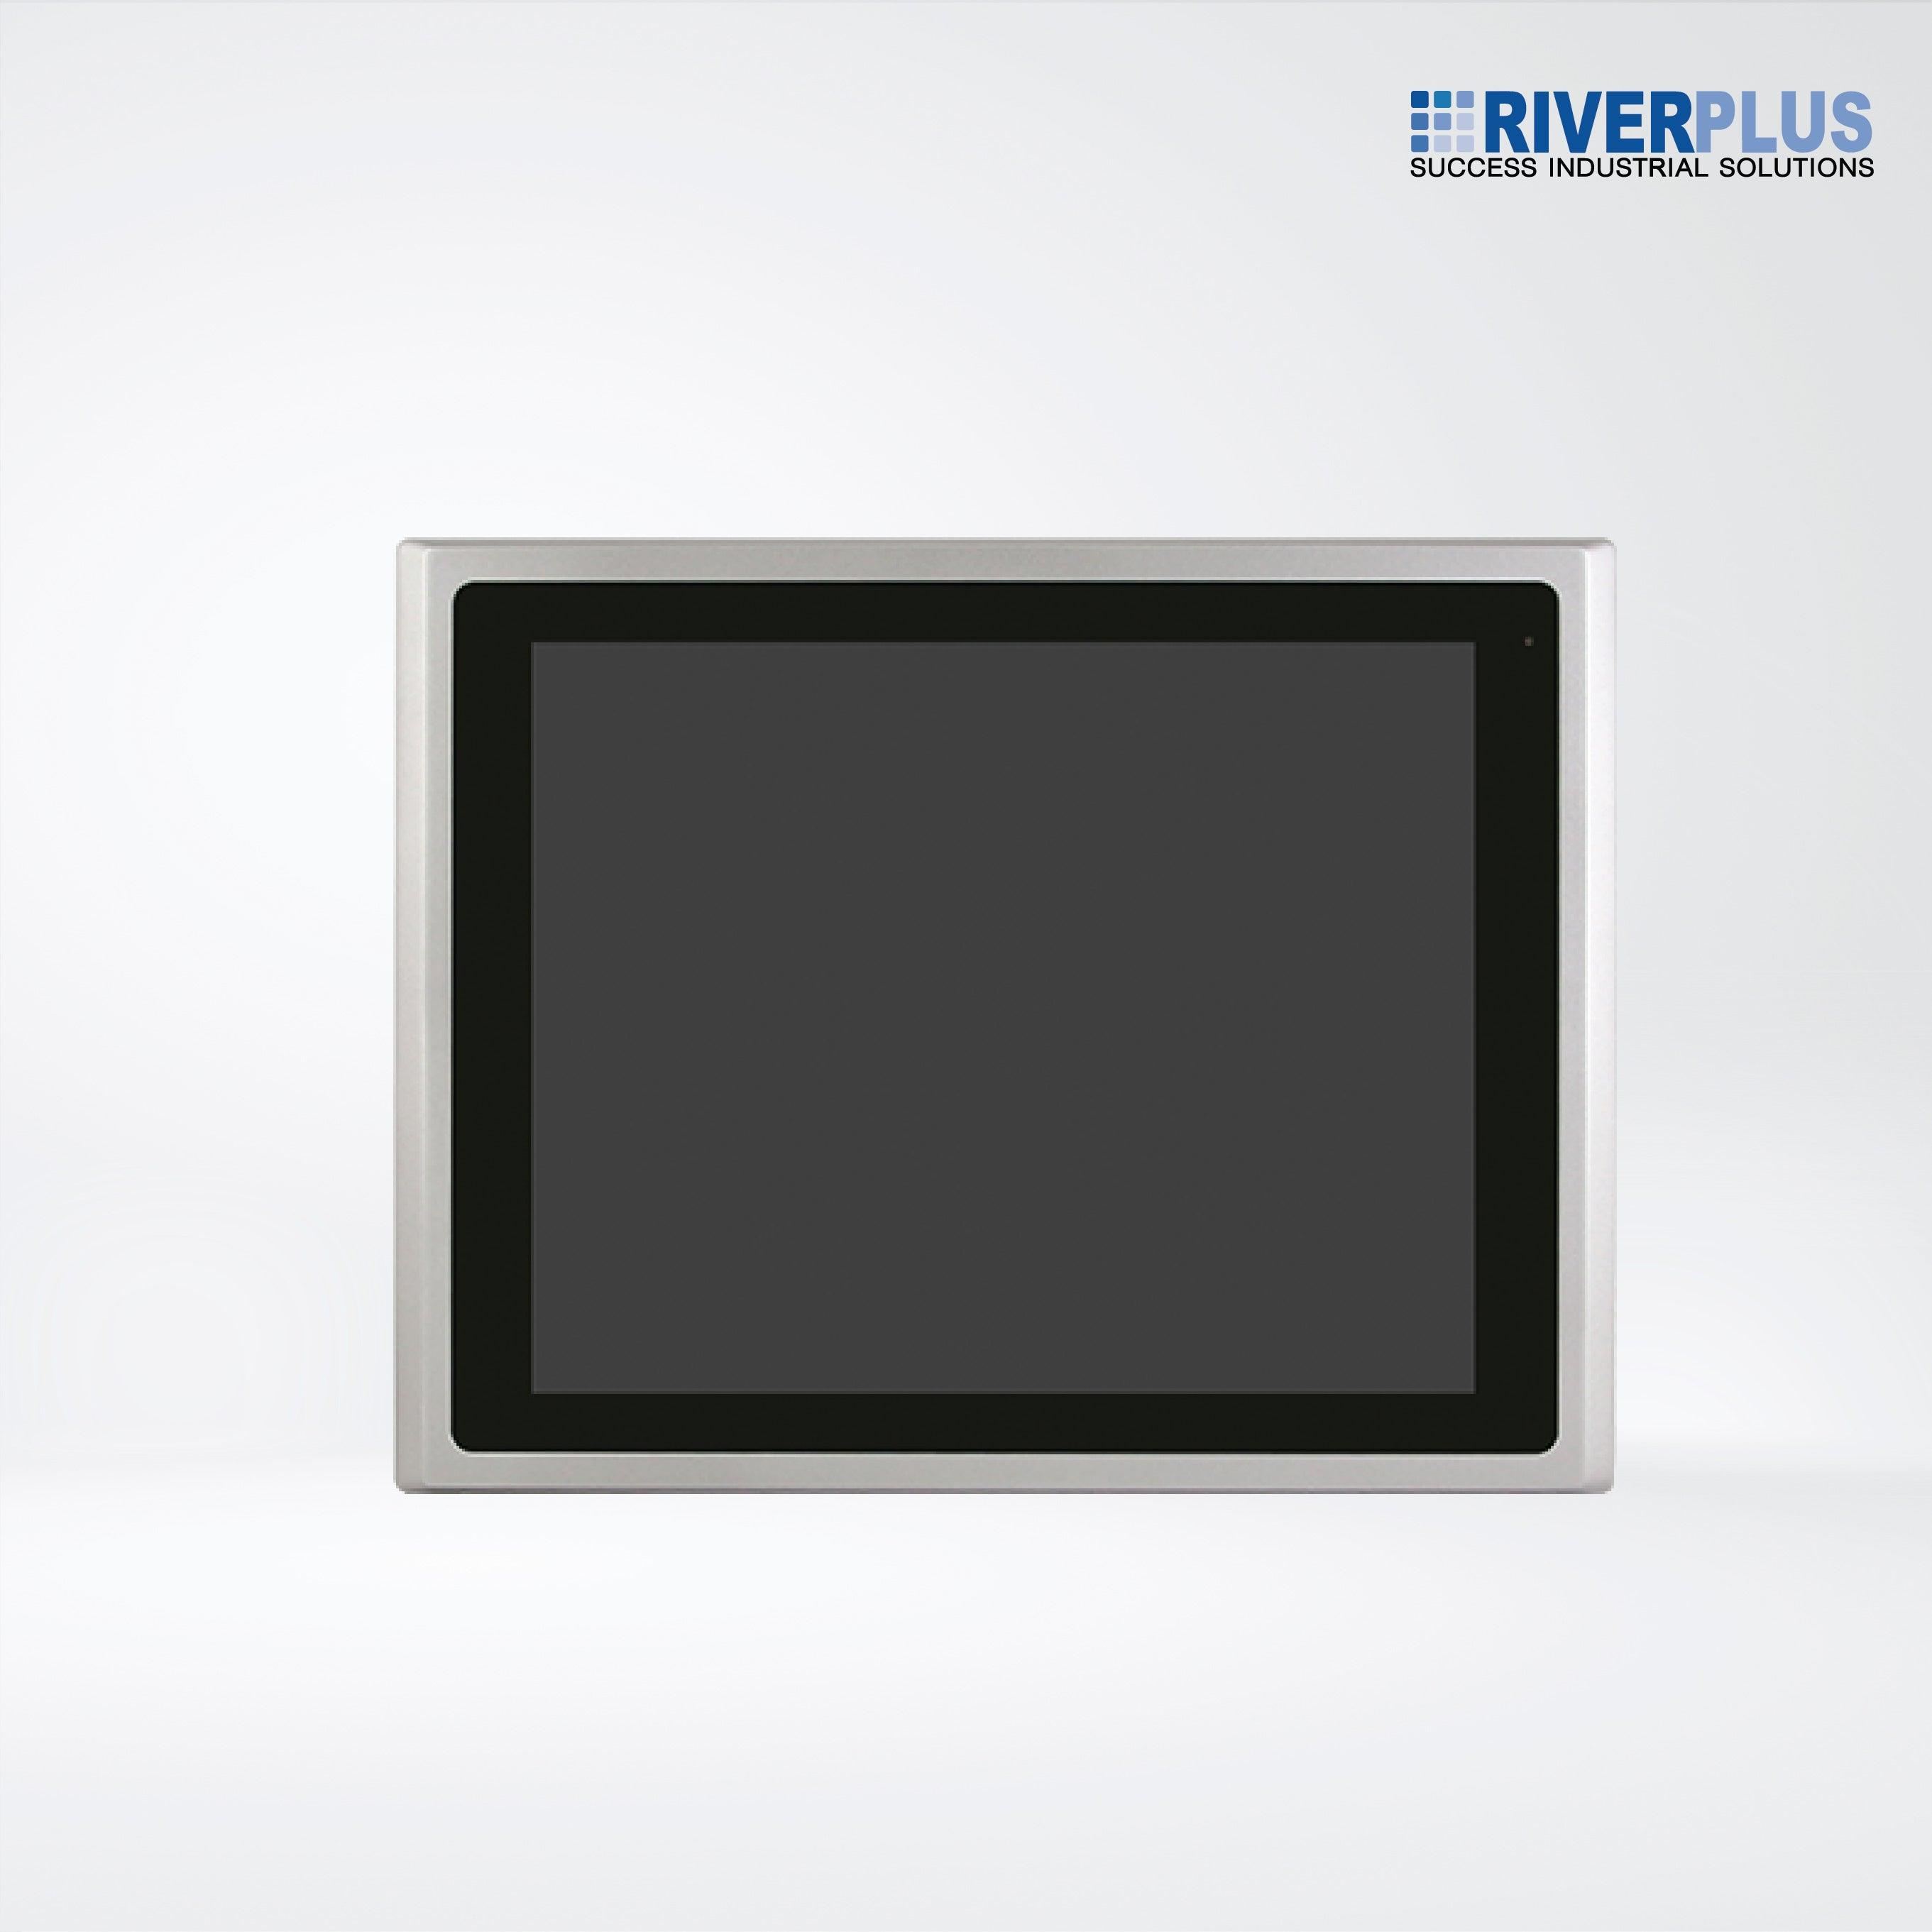 ViPAC-917PH 17” Intel 6th/7th Core i3/i5/i7 Panel PC - Riverplus